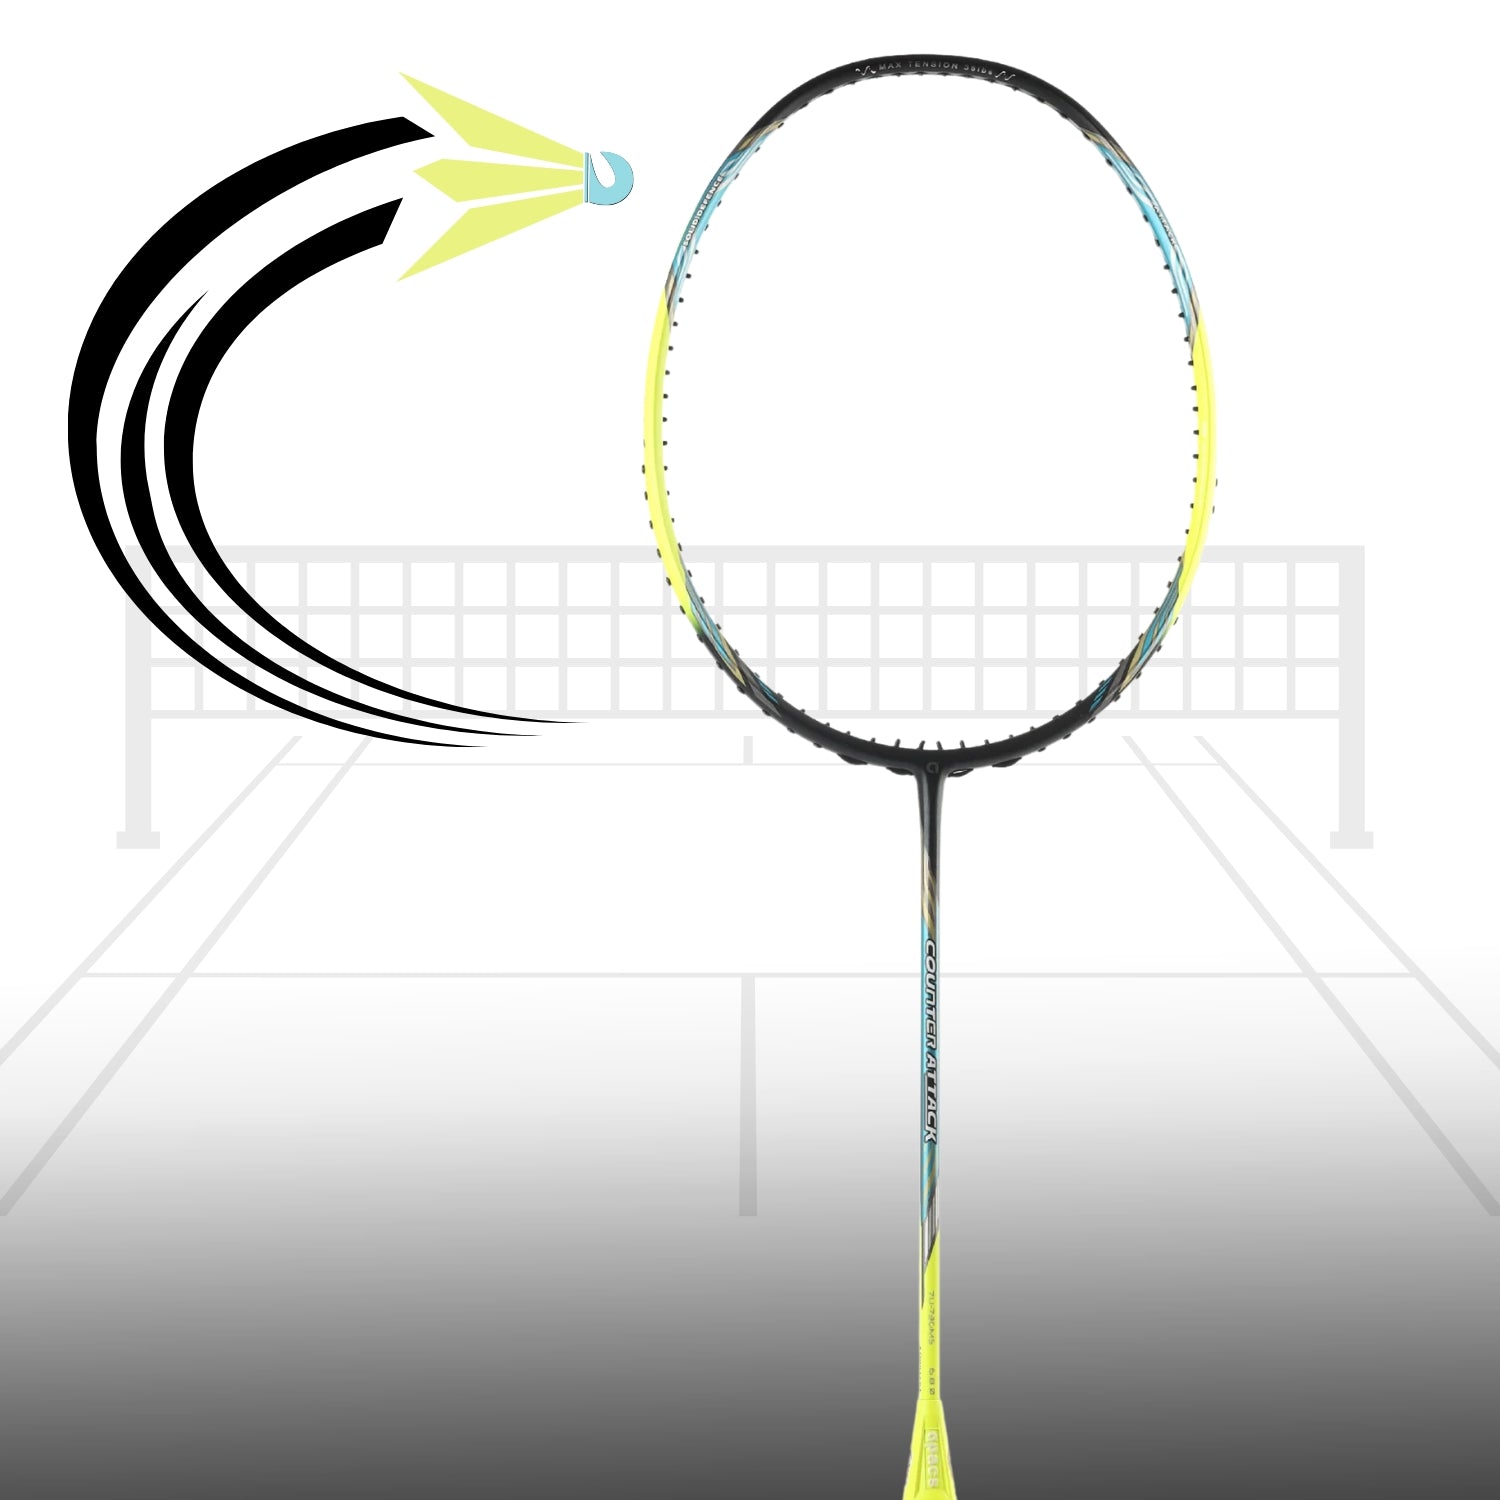 Apacs Counter Attack Matt Finish Badminton Racket - without Cover - Best Price online Prokicksports.com